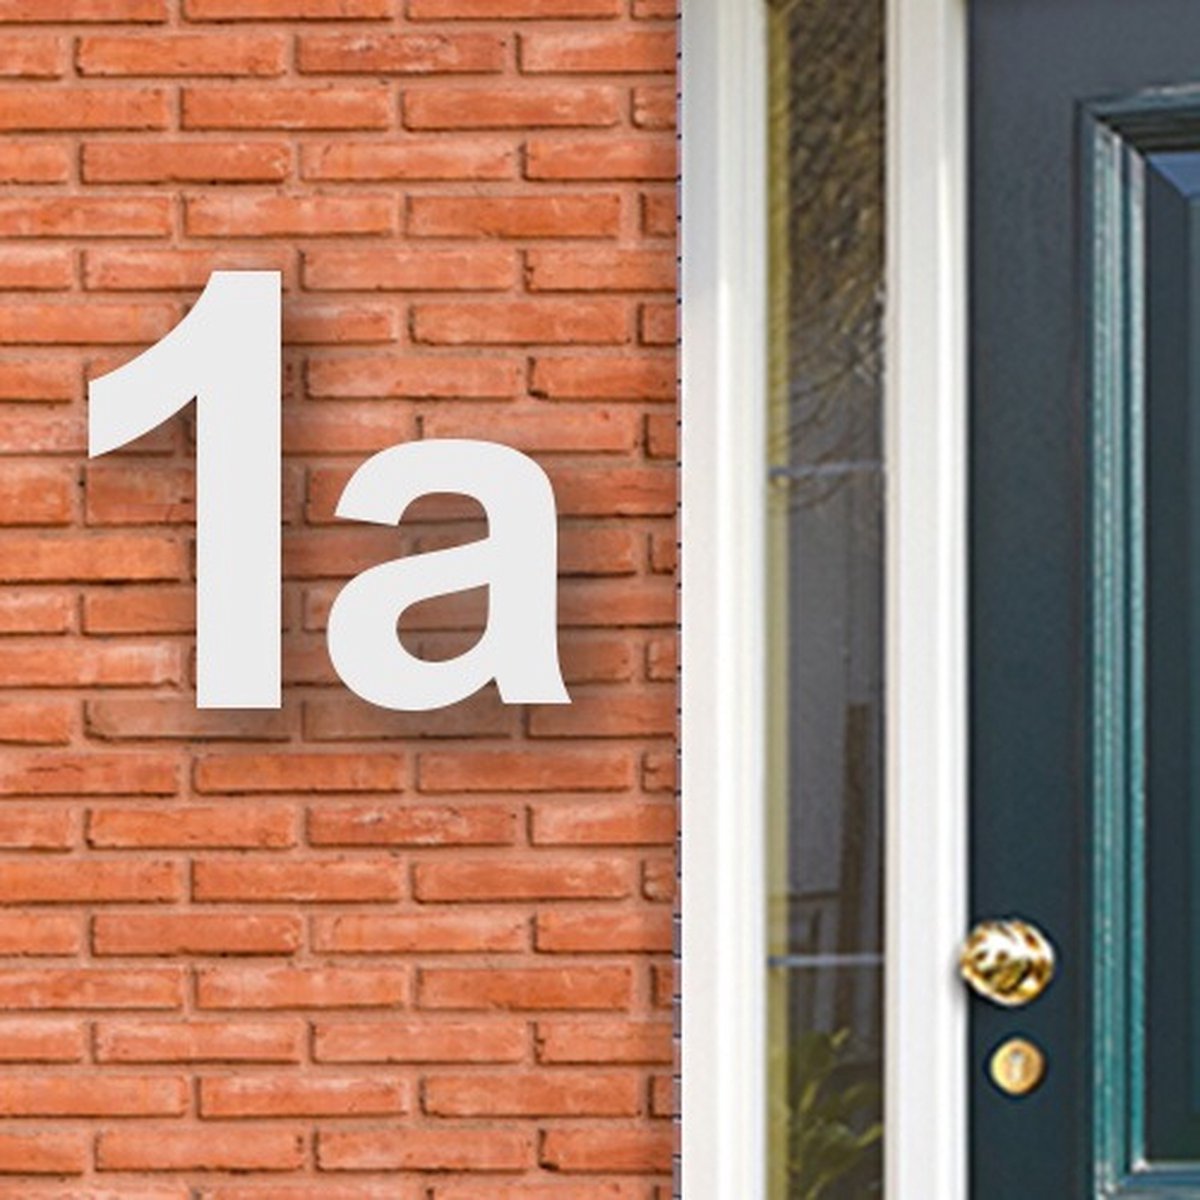 Huisnummer Acryl wit, letter a Hoogte 12cm - Huisnummers - Huisnummer wit - Huisnummer modern - Gratis verzending!